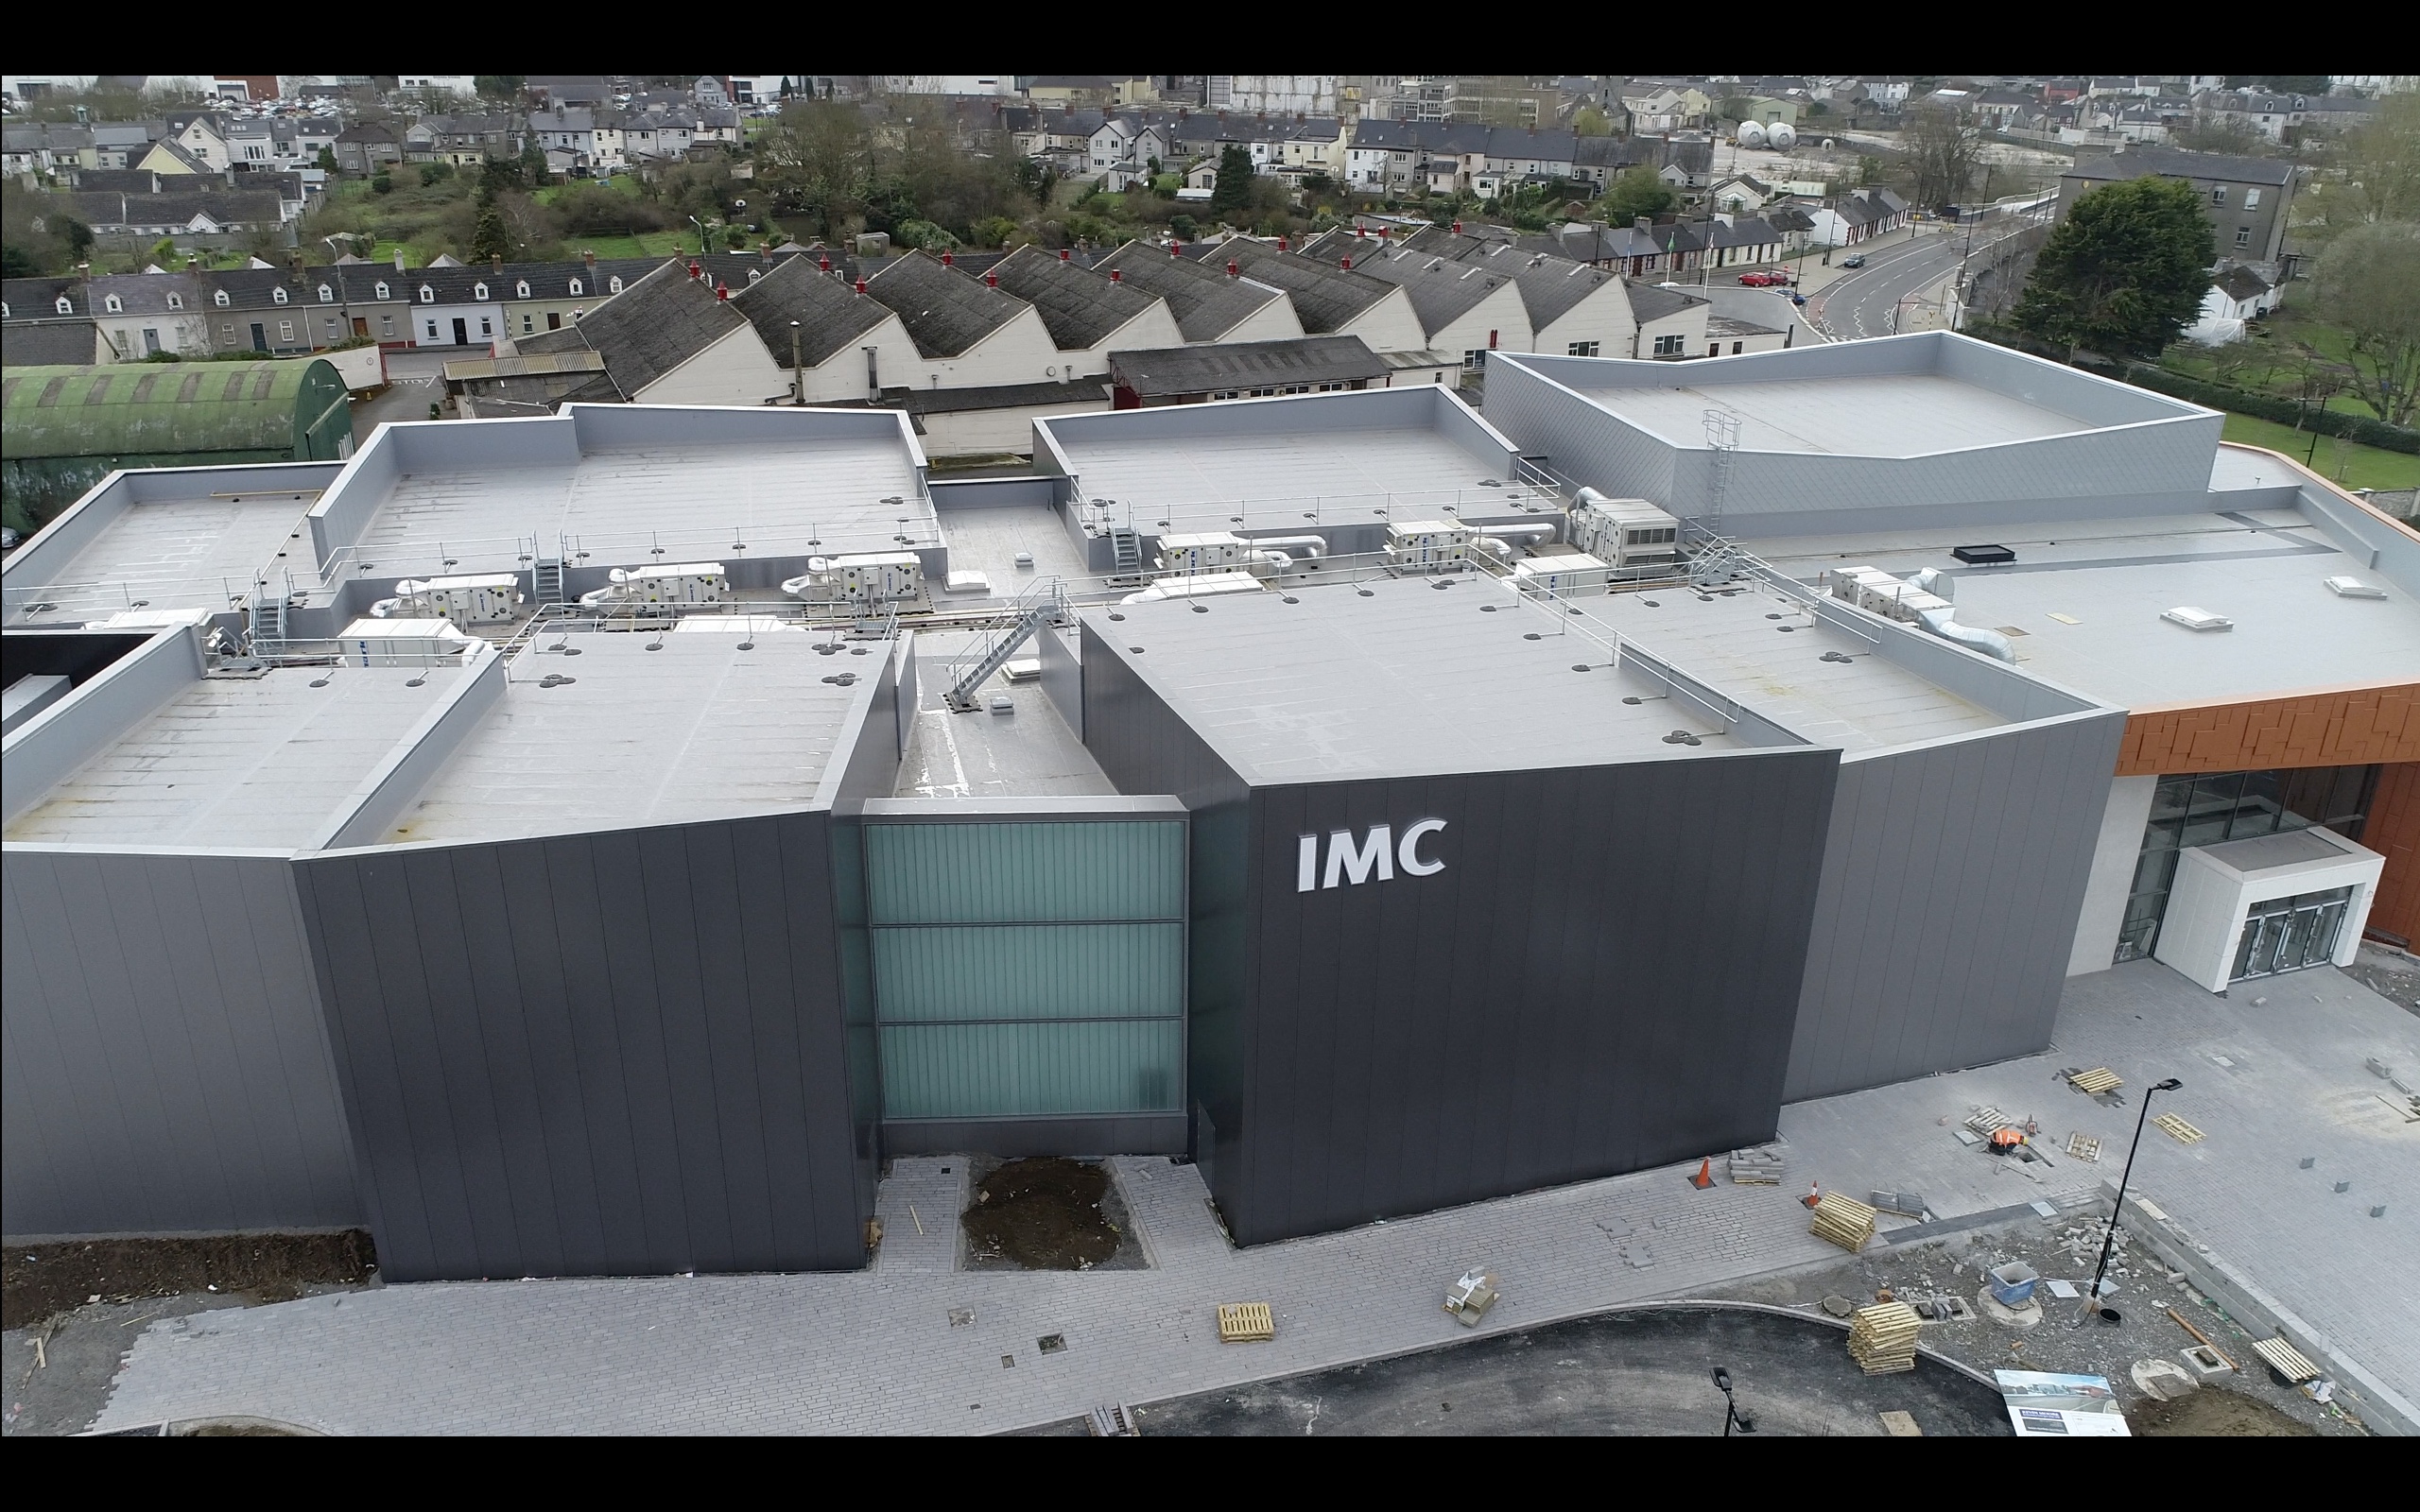 Kilkenny IMC Cinema Nearly Complete